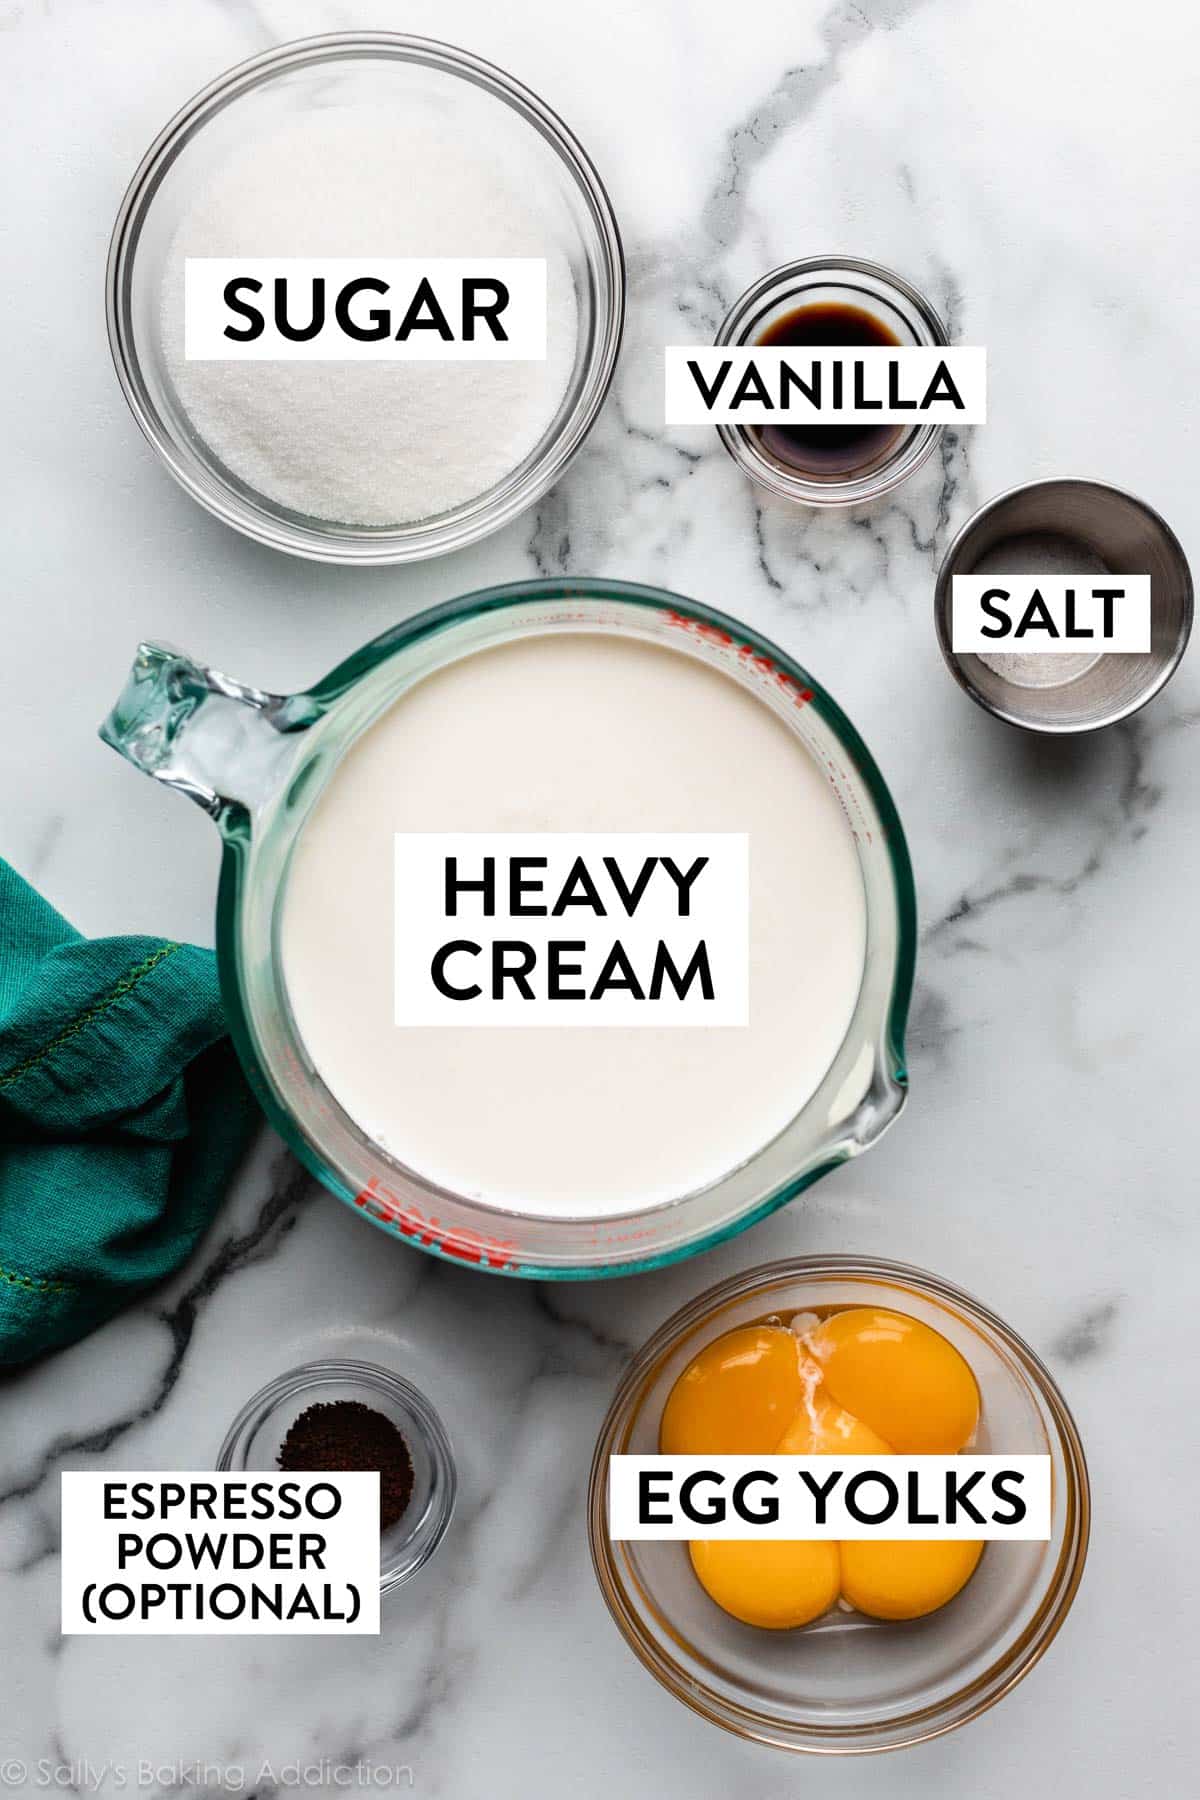 ingredients on counter including bowl of egg yolks, espresso powder, heavy cream, sugar, vanilla, and salt.